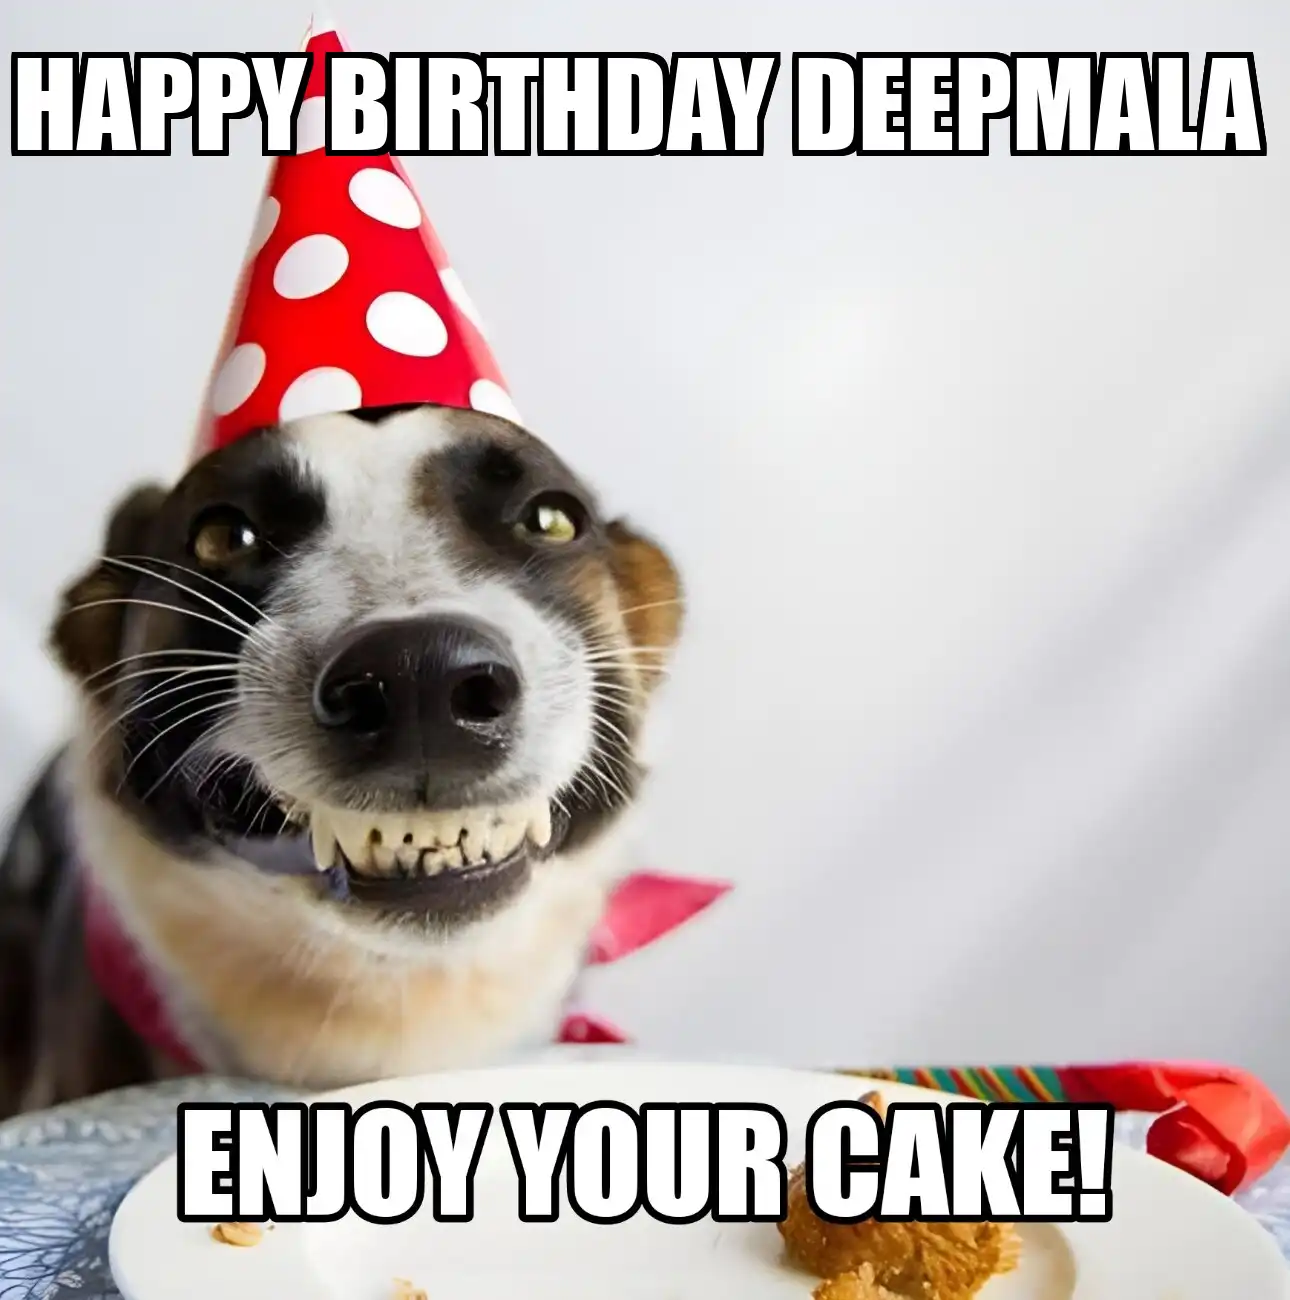 Happy Birthday Deepmala Enjoy Your Cake Dog Meme